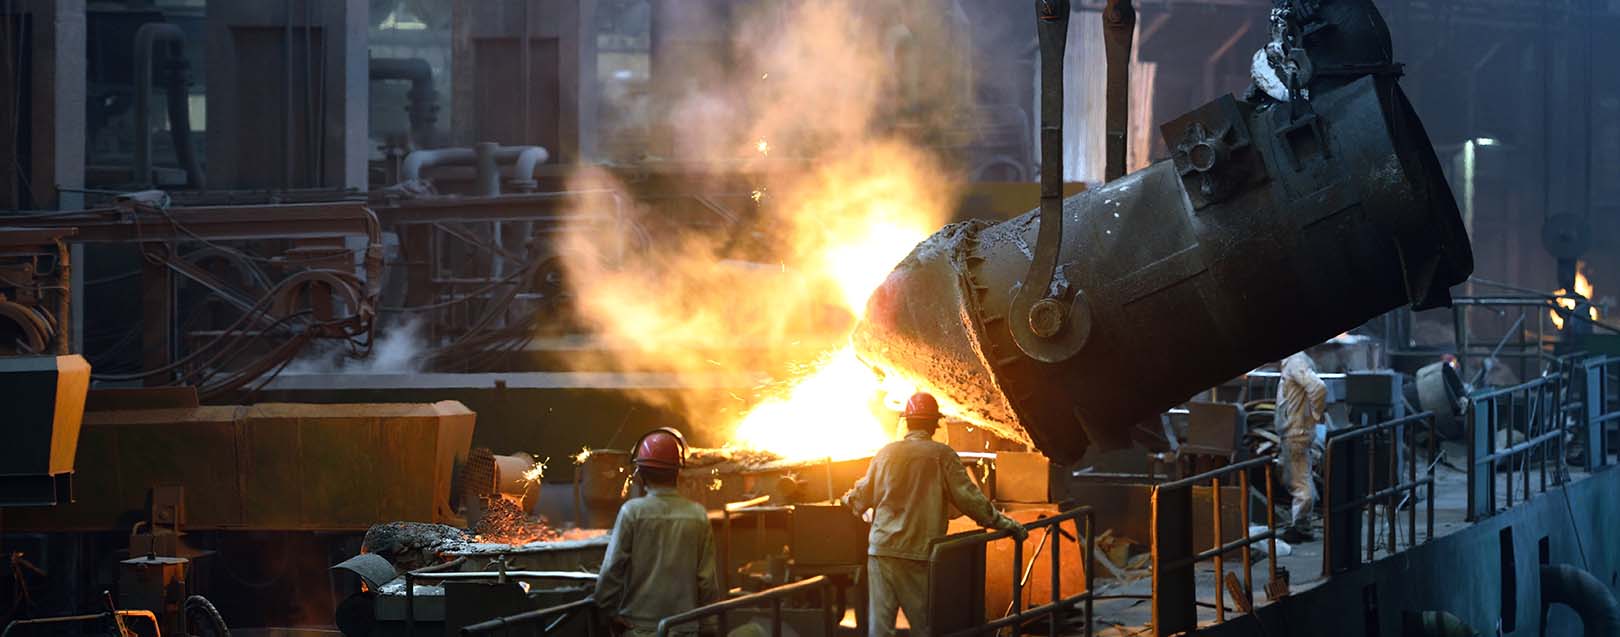 Essar Steel planning to bring in strategic investor to cut debts